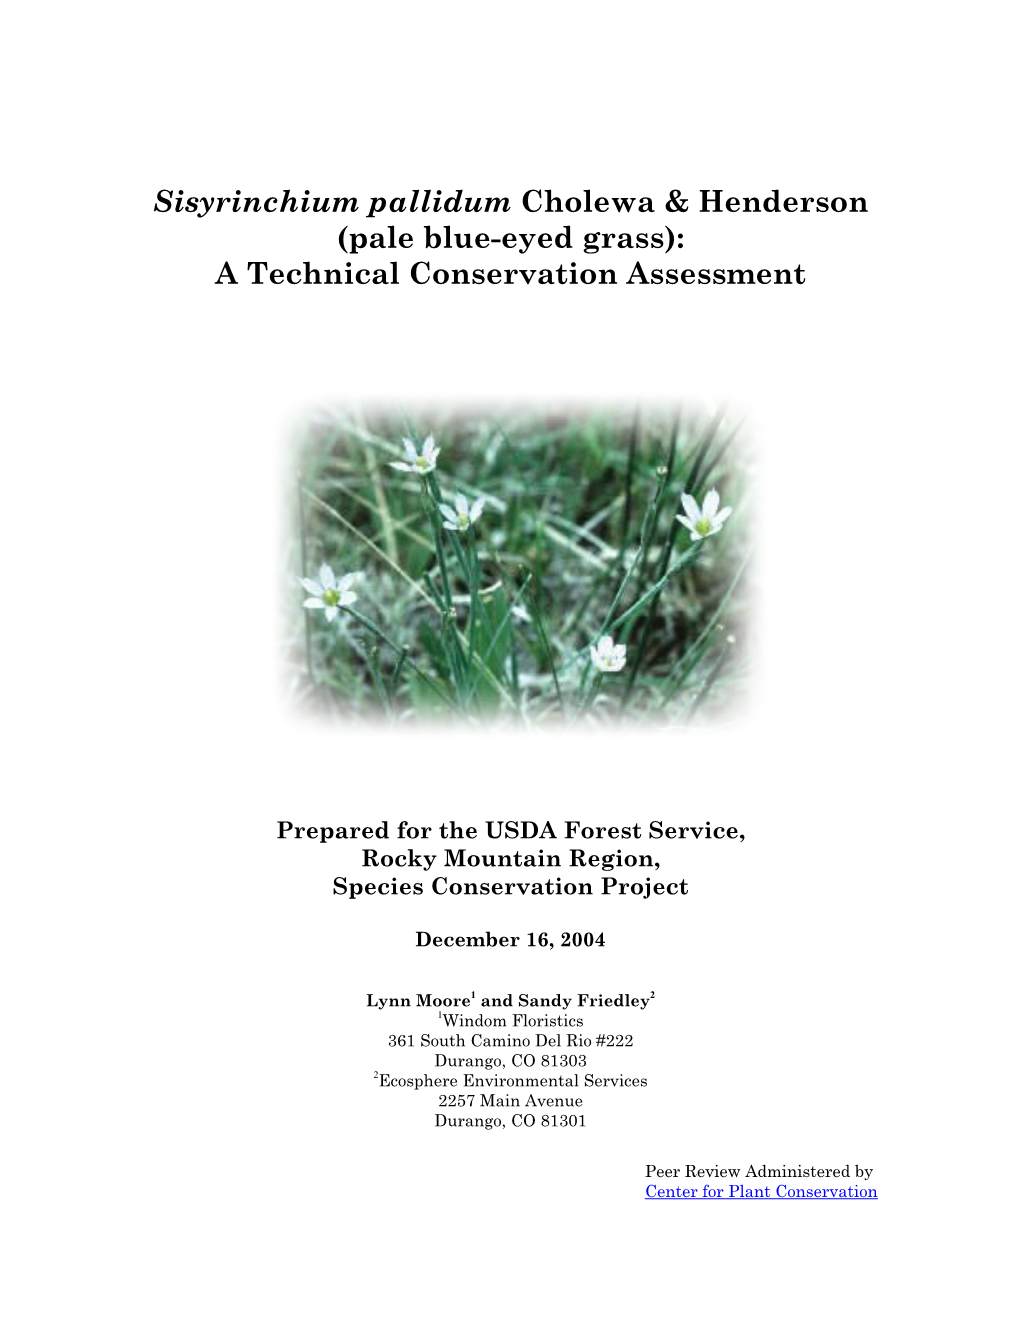 Sisyrinchium Pallidum Cholewa & Henderson (Pale Blue-Eyed Grass): a Technical Conservation Assessment